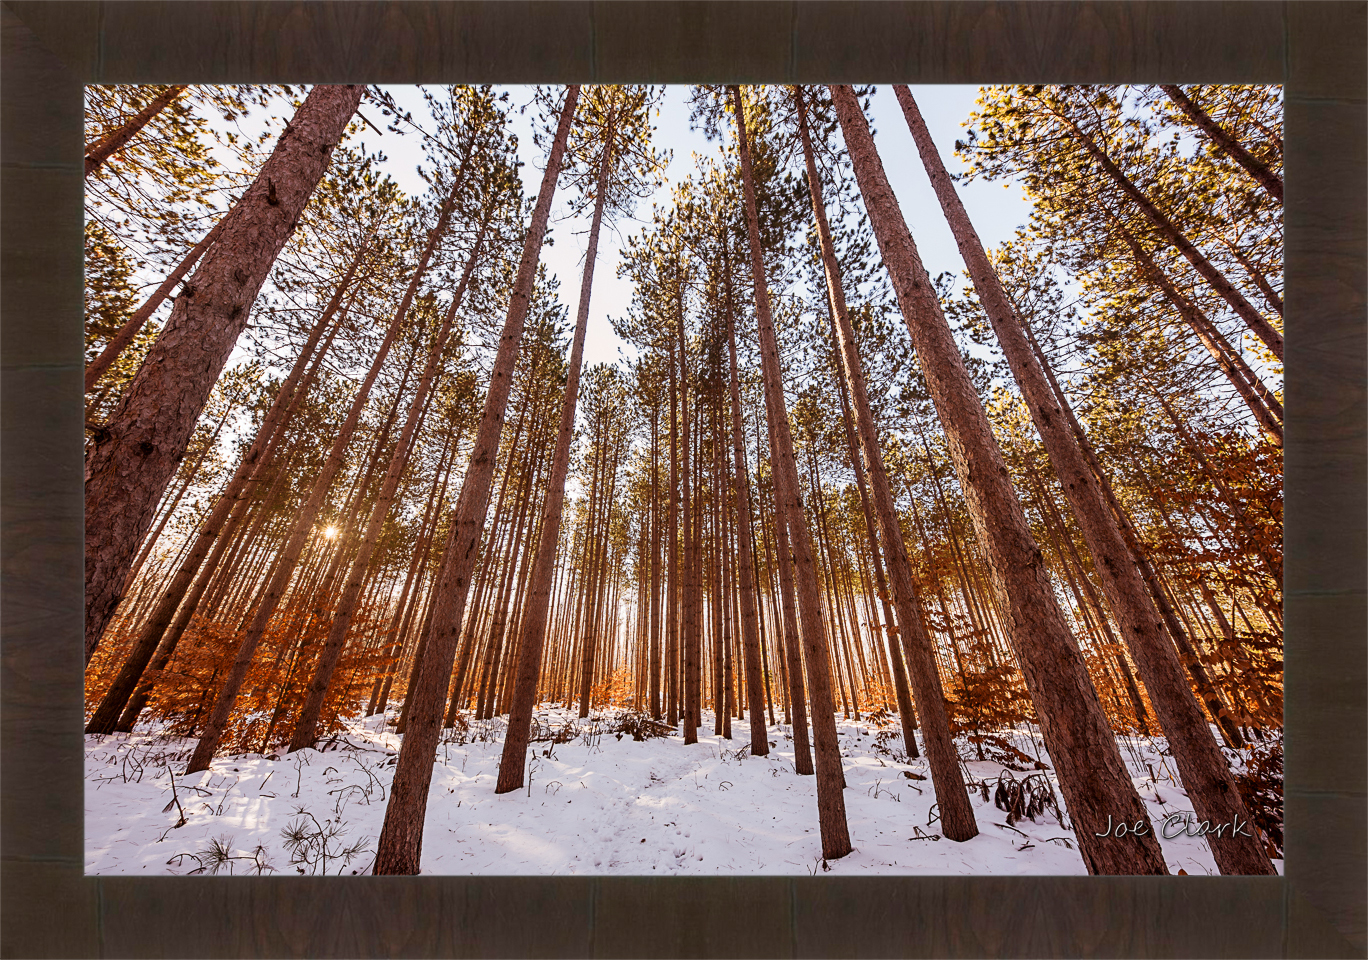 Pine Snow by Joe Clark R60545